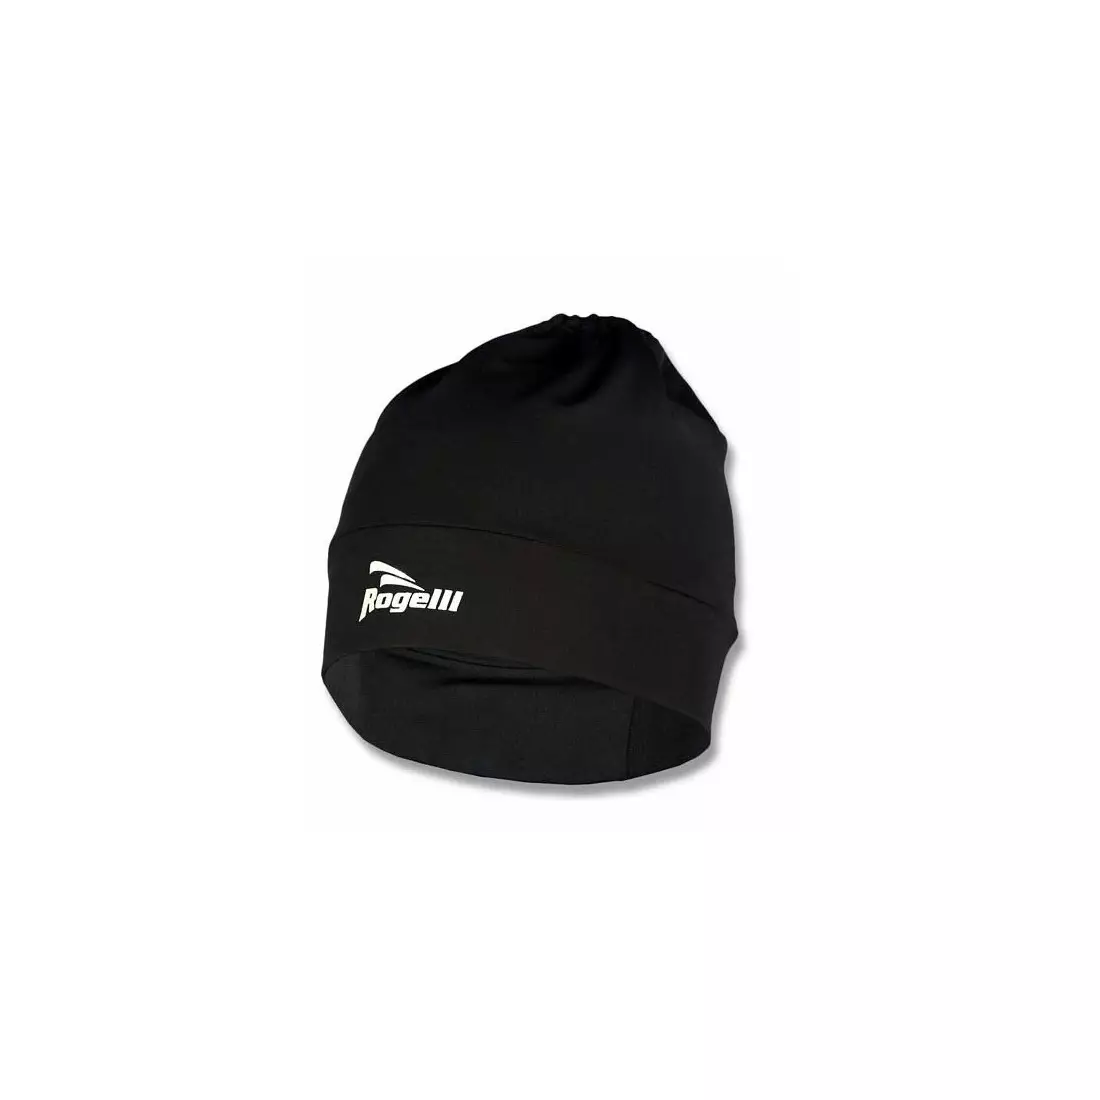 ROGELLI SS18 LASA 009.101 - Snood hat, one size, black